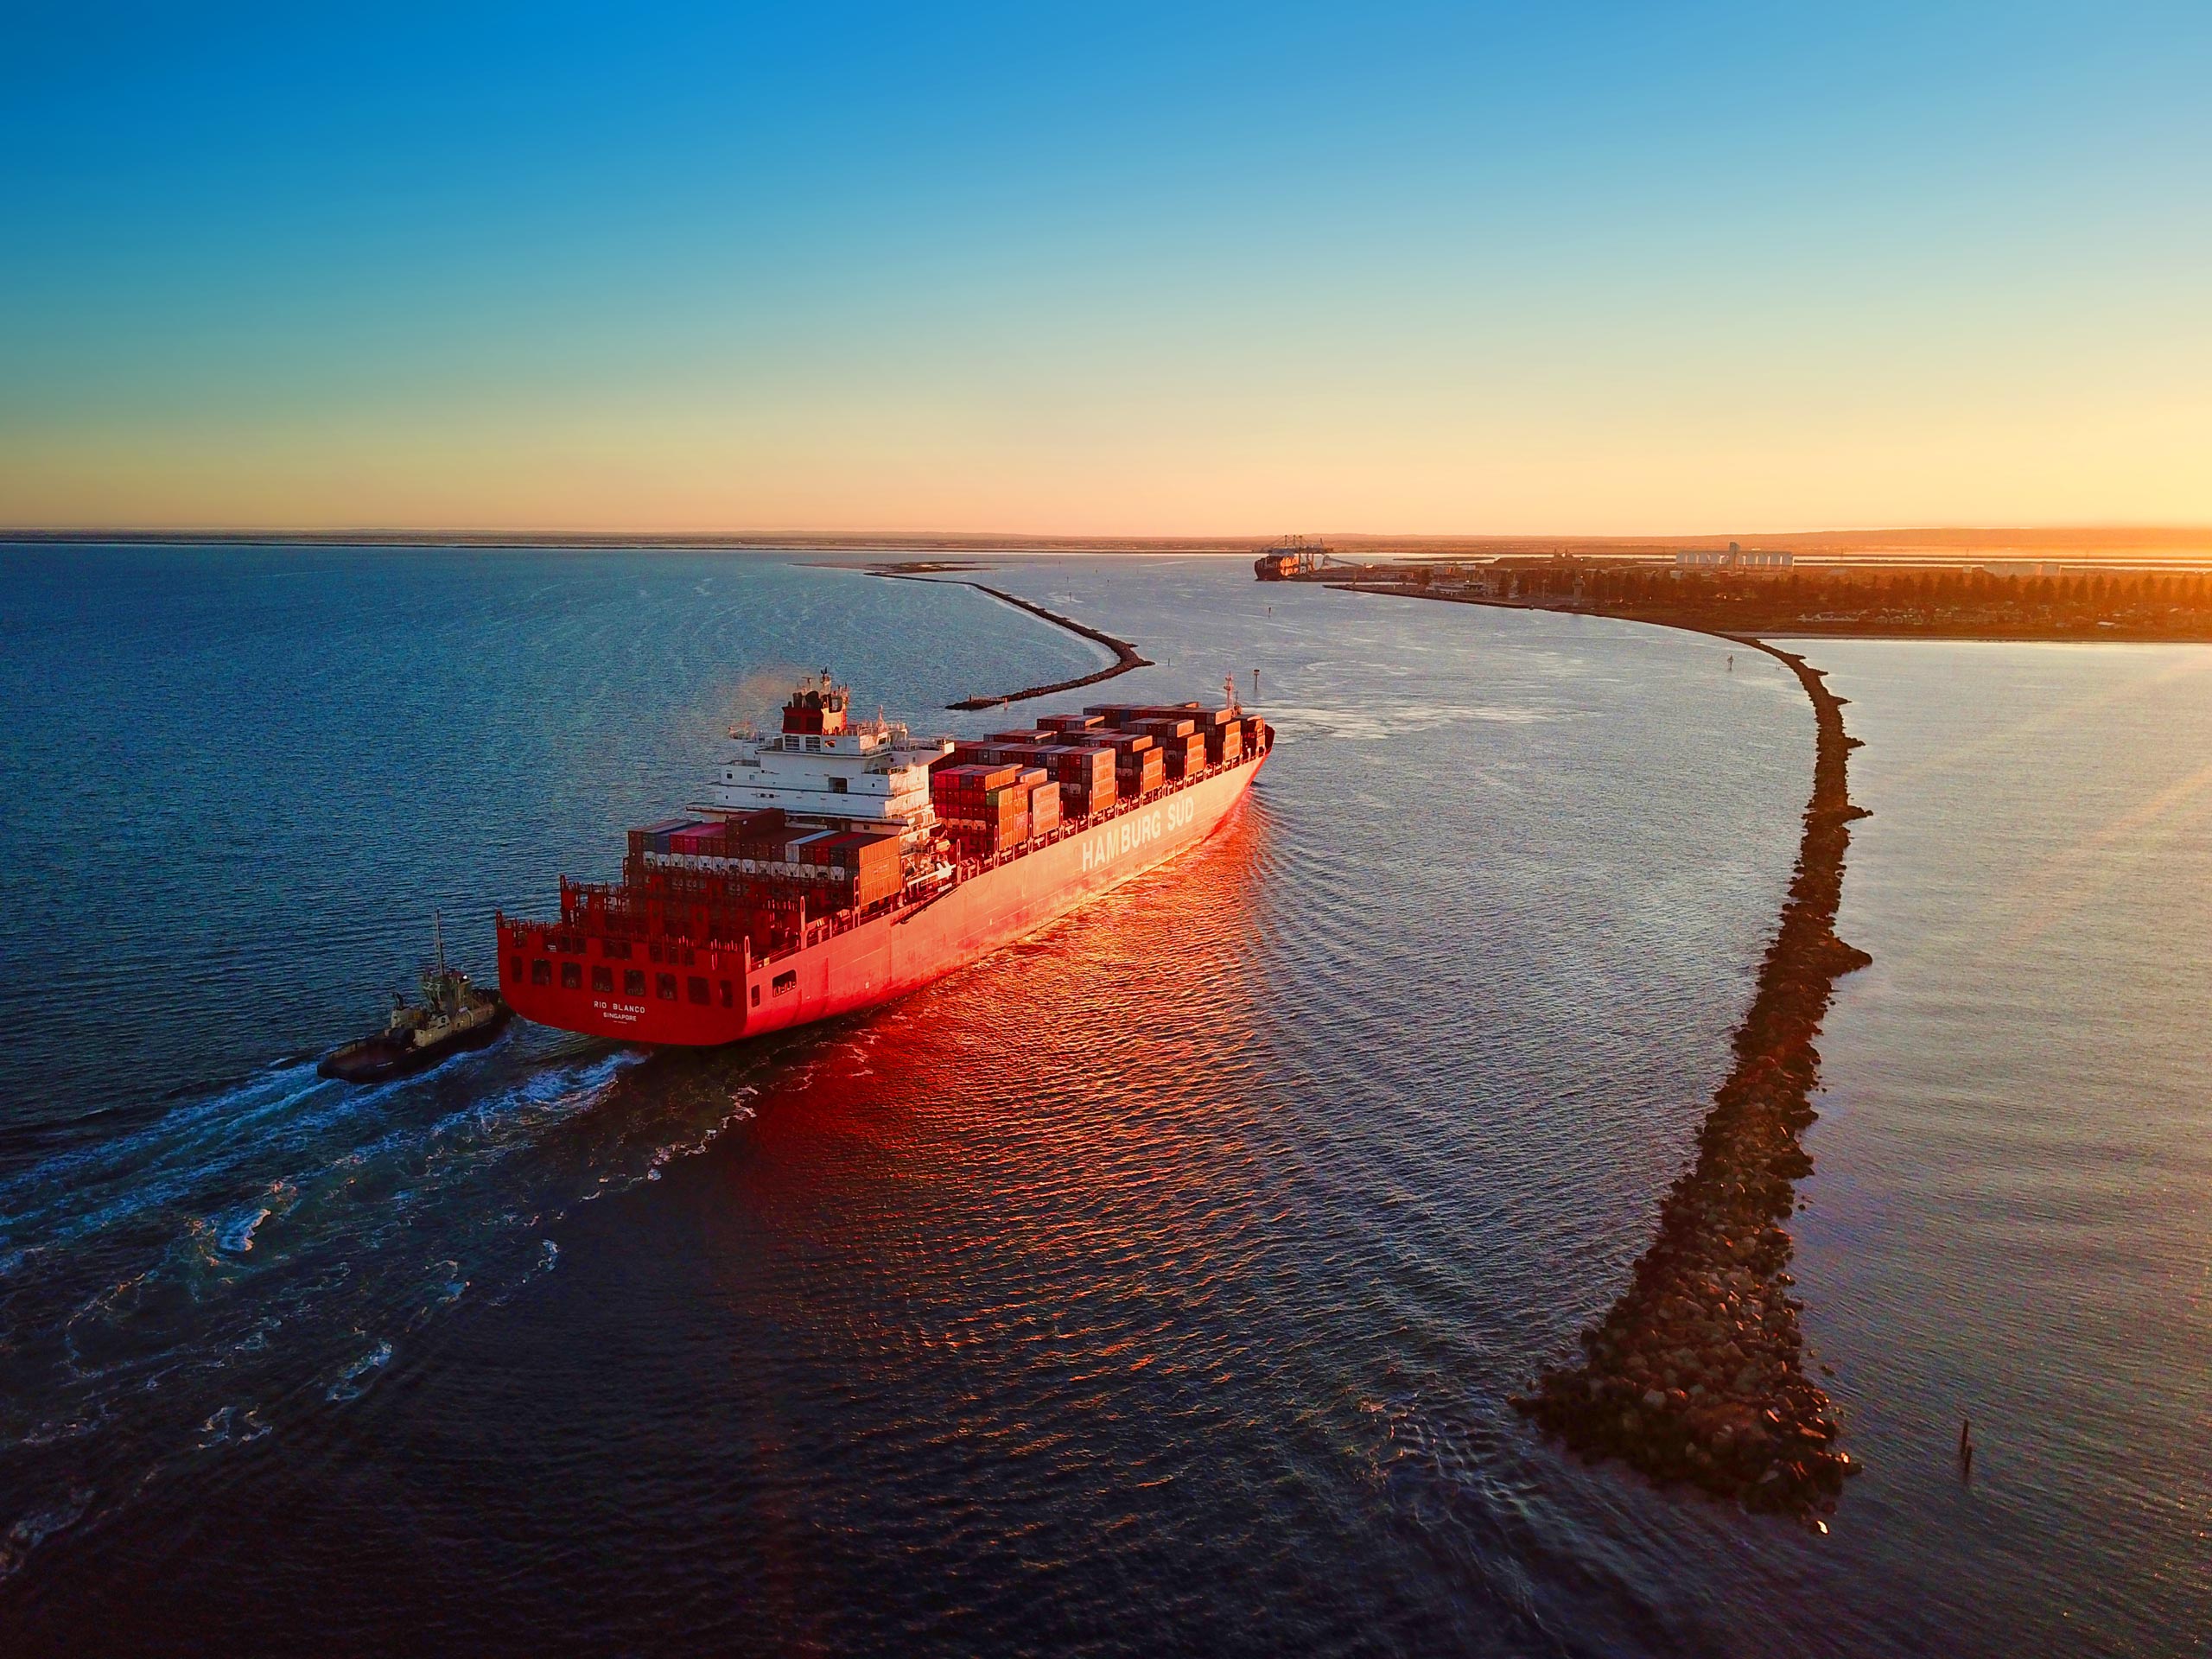 Adelaide-led group to undertake feasibility study for major new SA port facility